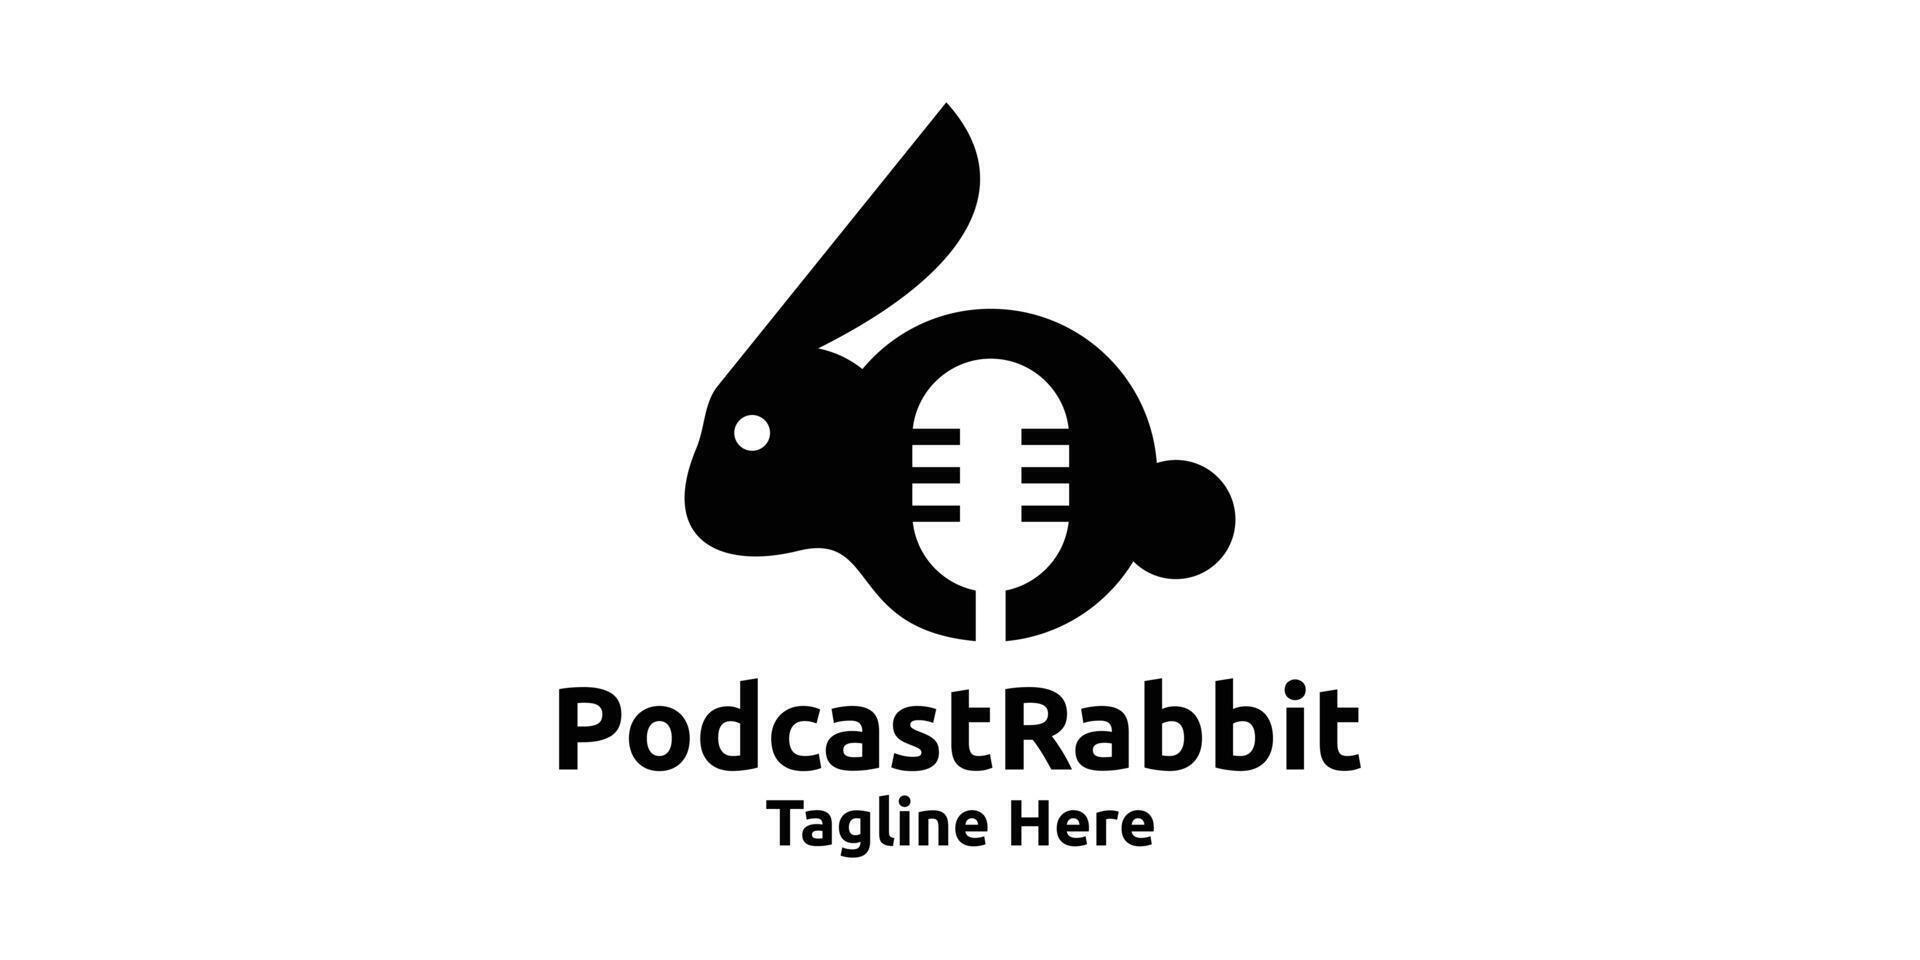 creative podcast rabbit logo design, microphone logo with rabbit, logo design template, symbol, icon, creative idea. vector